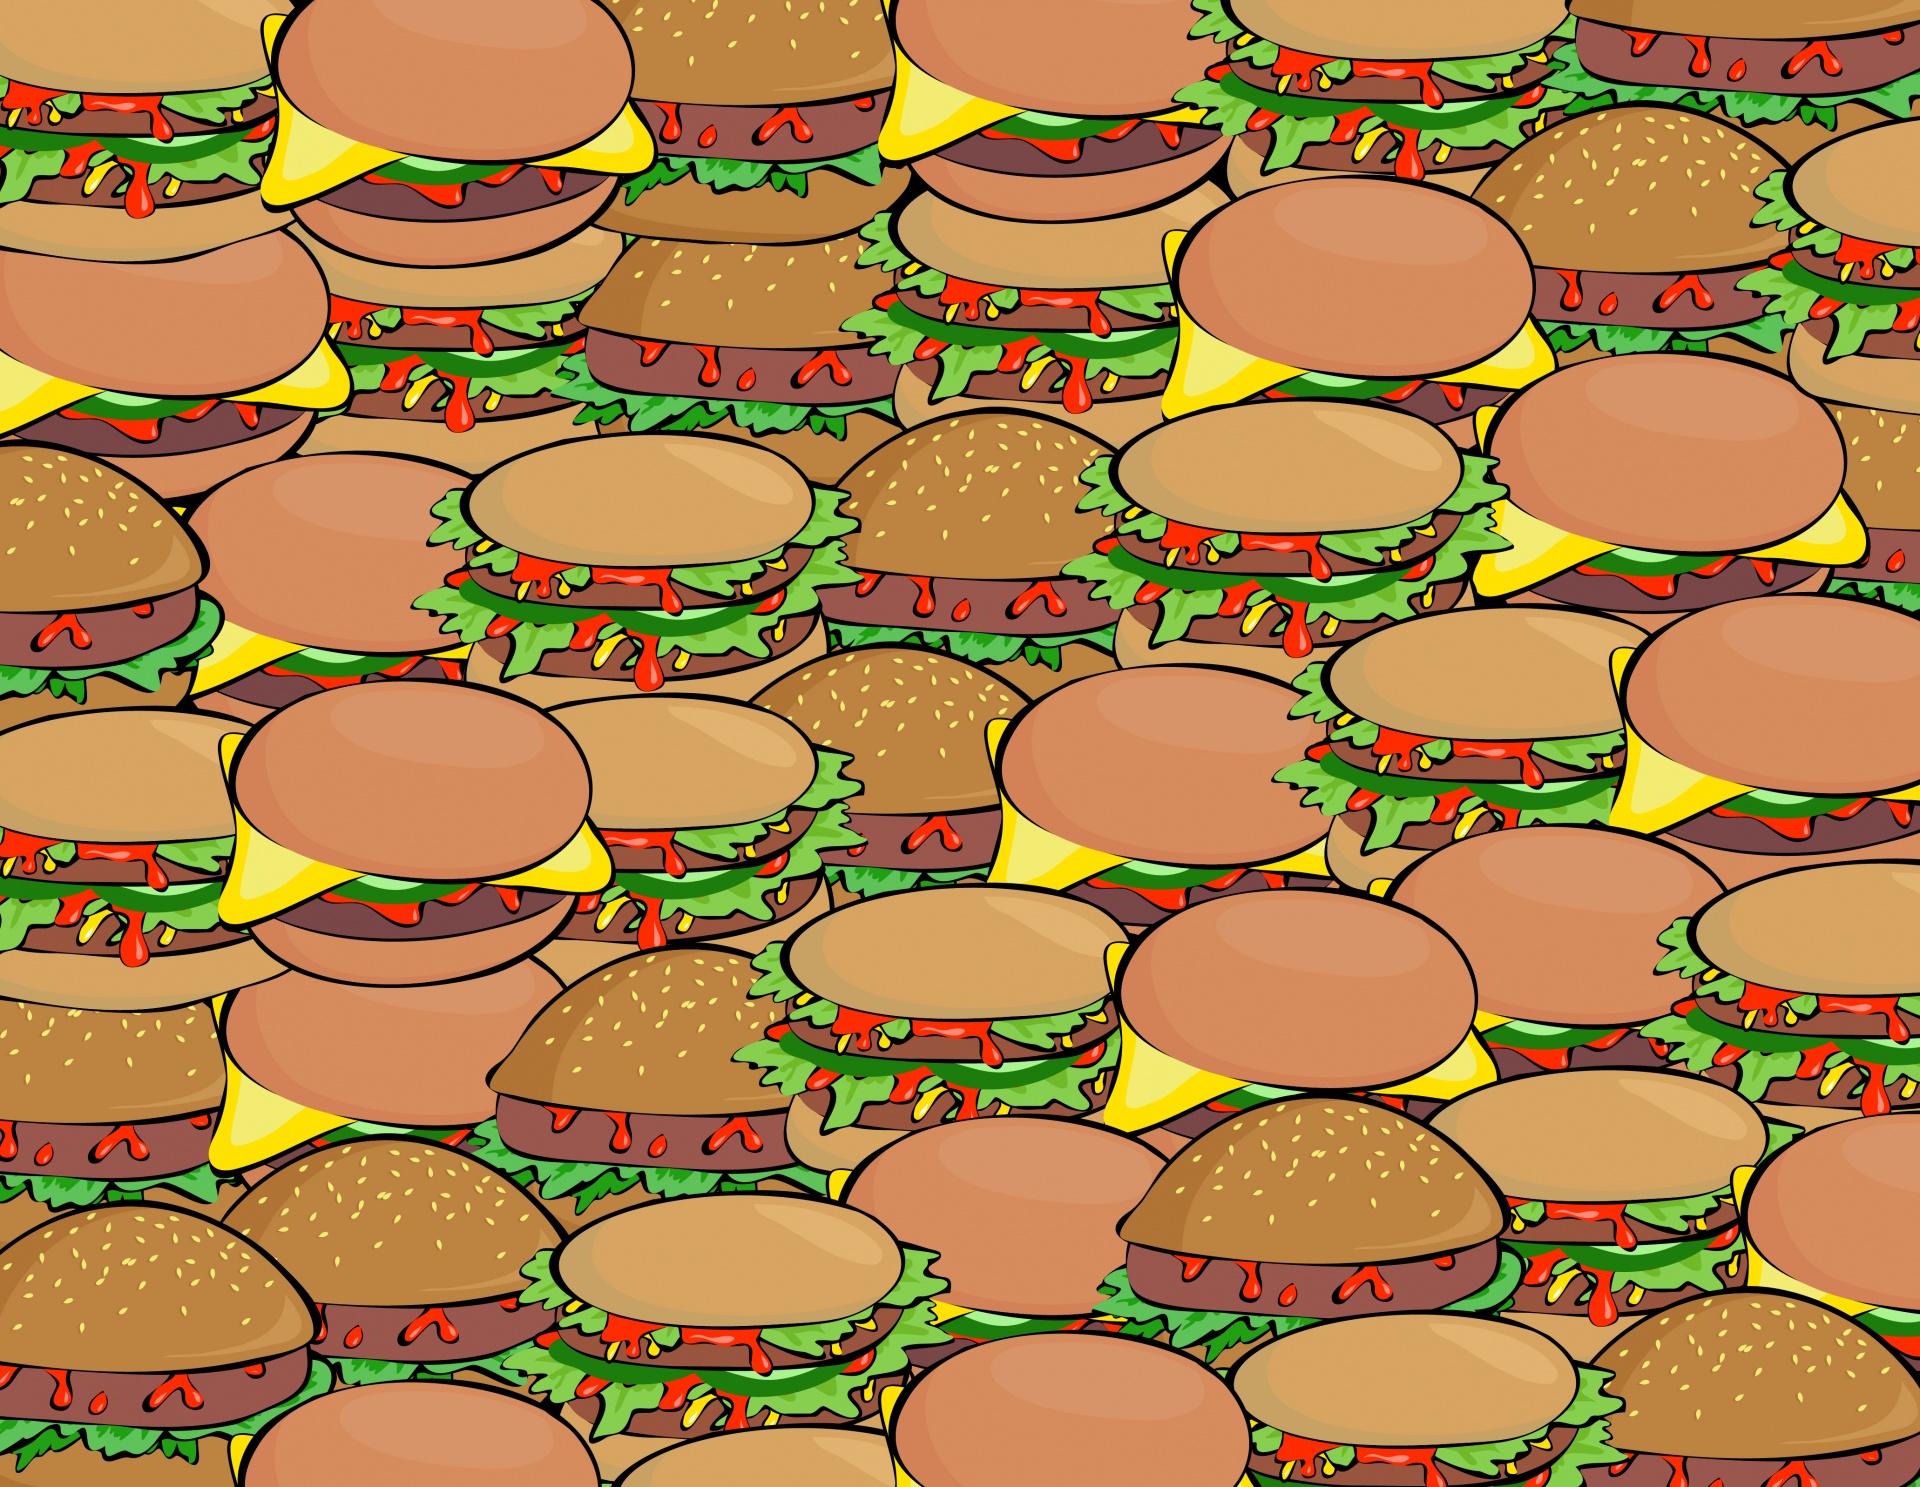 Digitally created burger wallpaper.